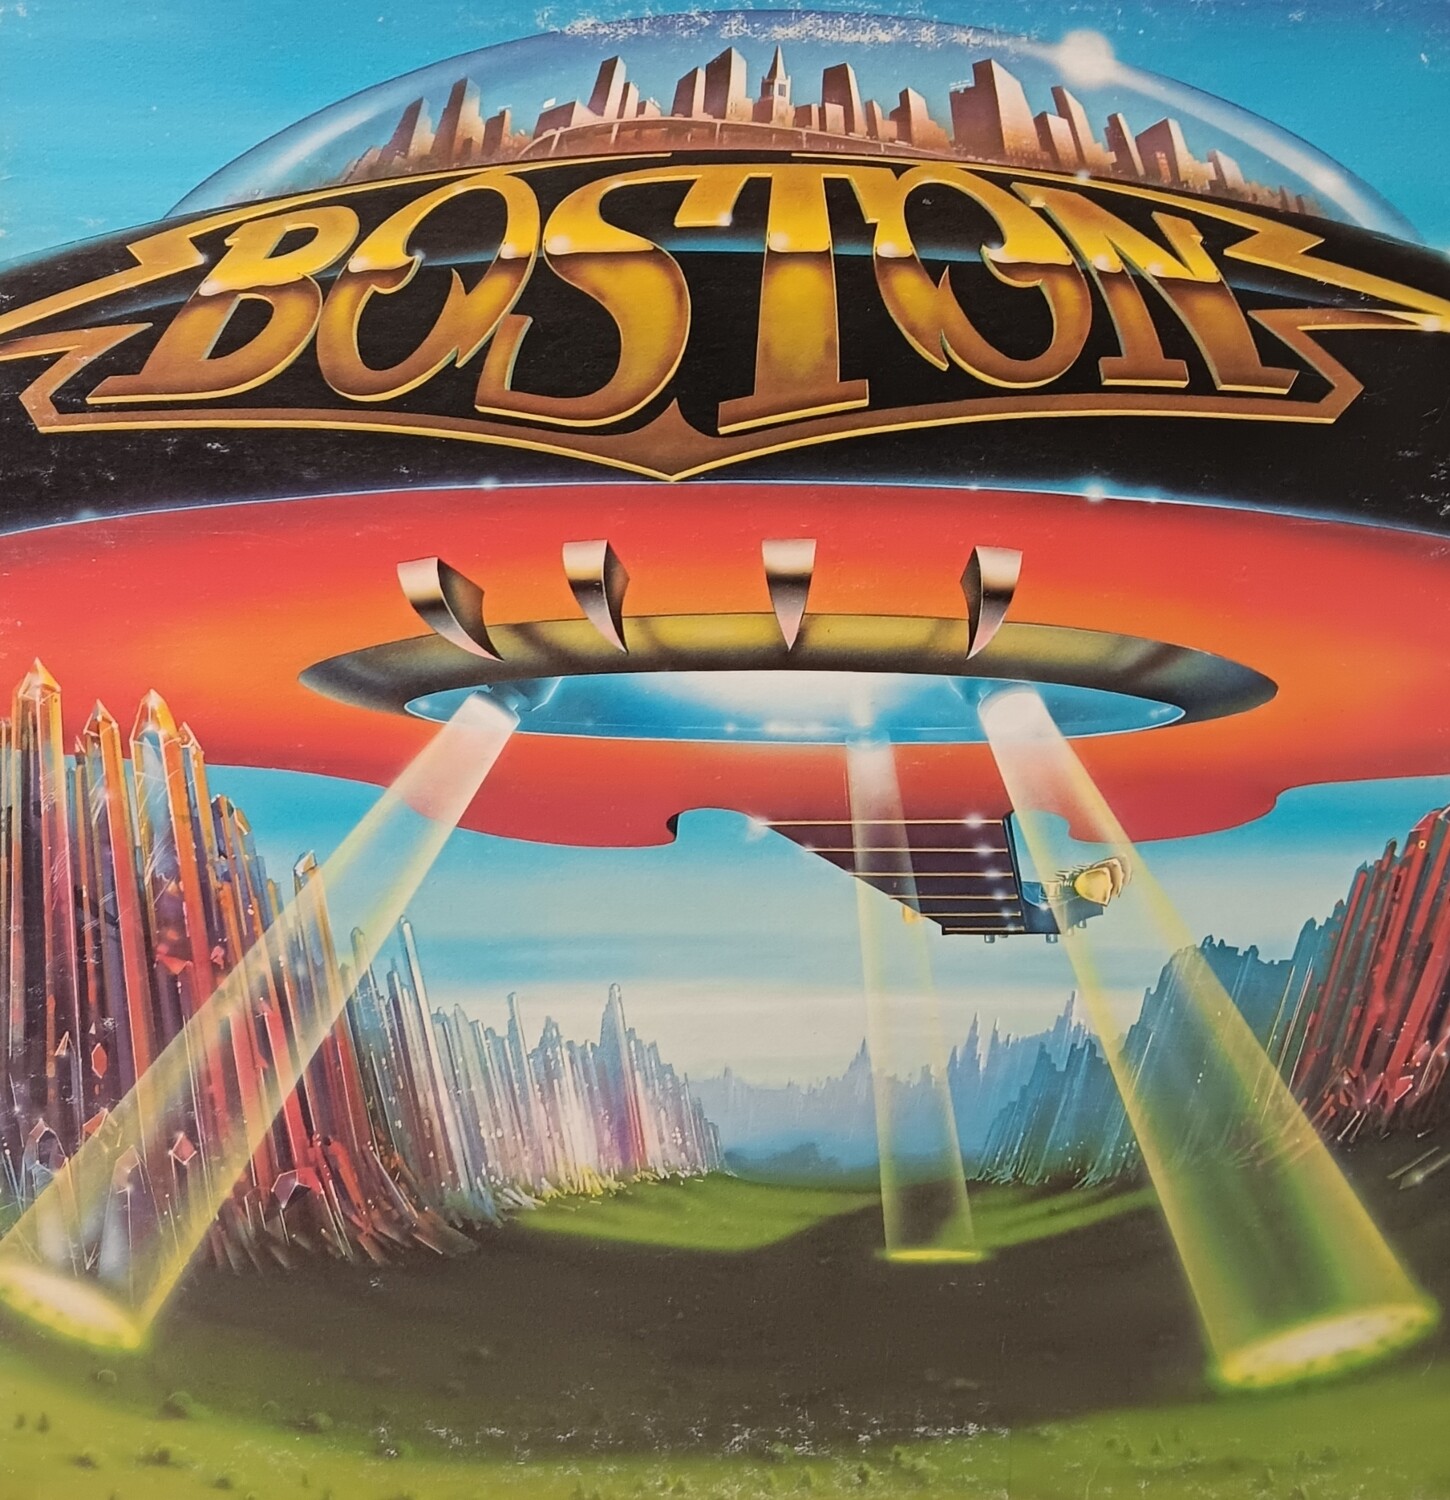 BOSTON - Don't look back